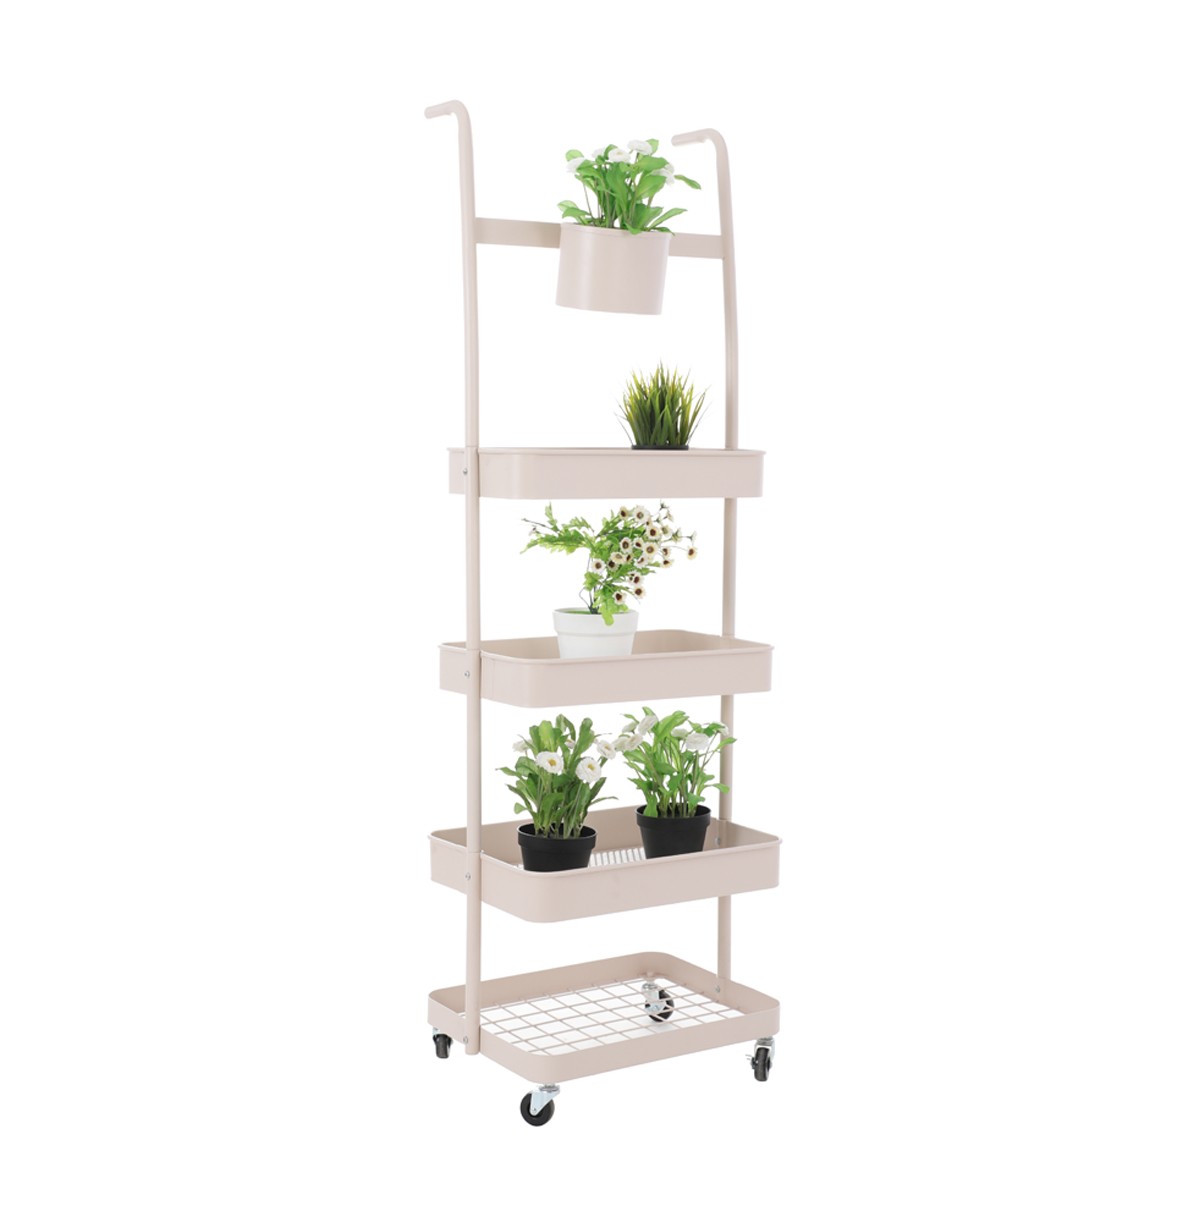 4-Tier Hanging Garden Plant Stand Trolley Cart / Metal Plant Shelf / Plant Rack / Flower Pot Organizer / Flower Display Rack With Wheels